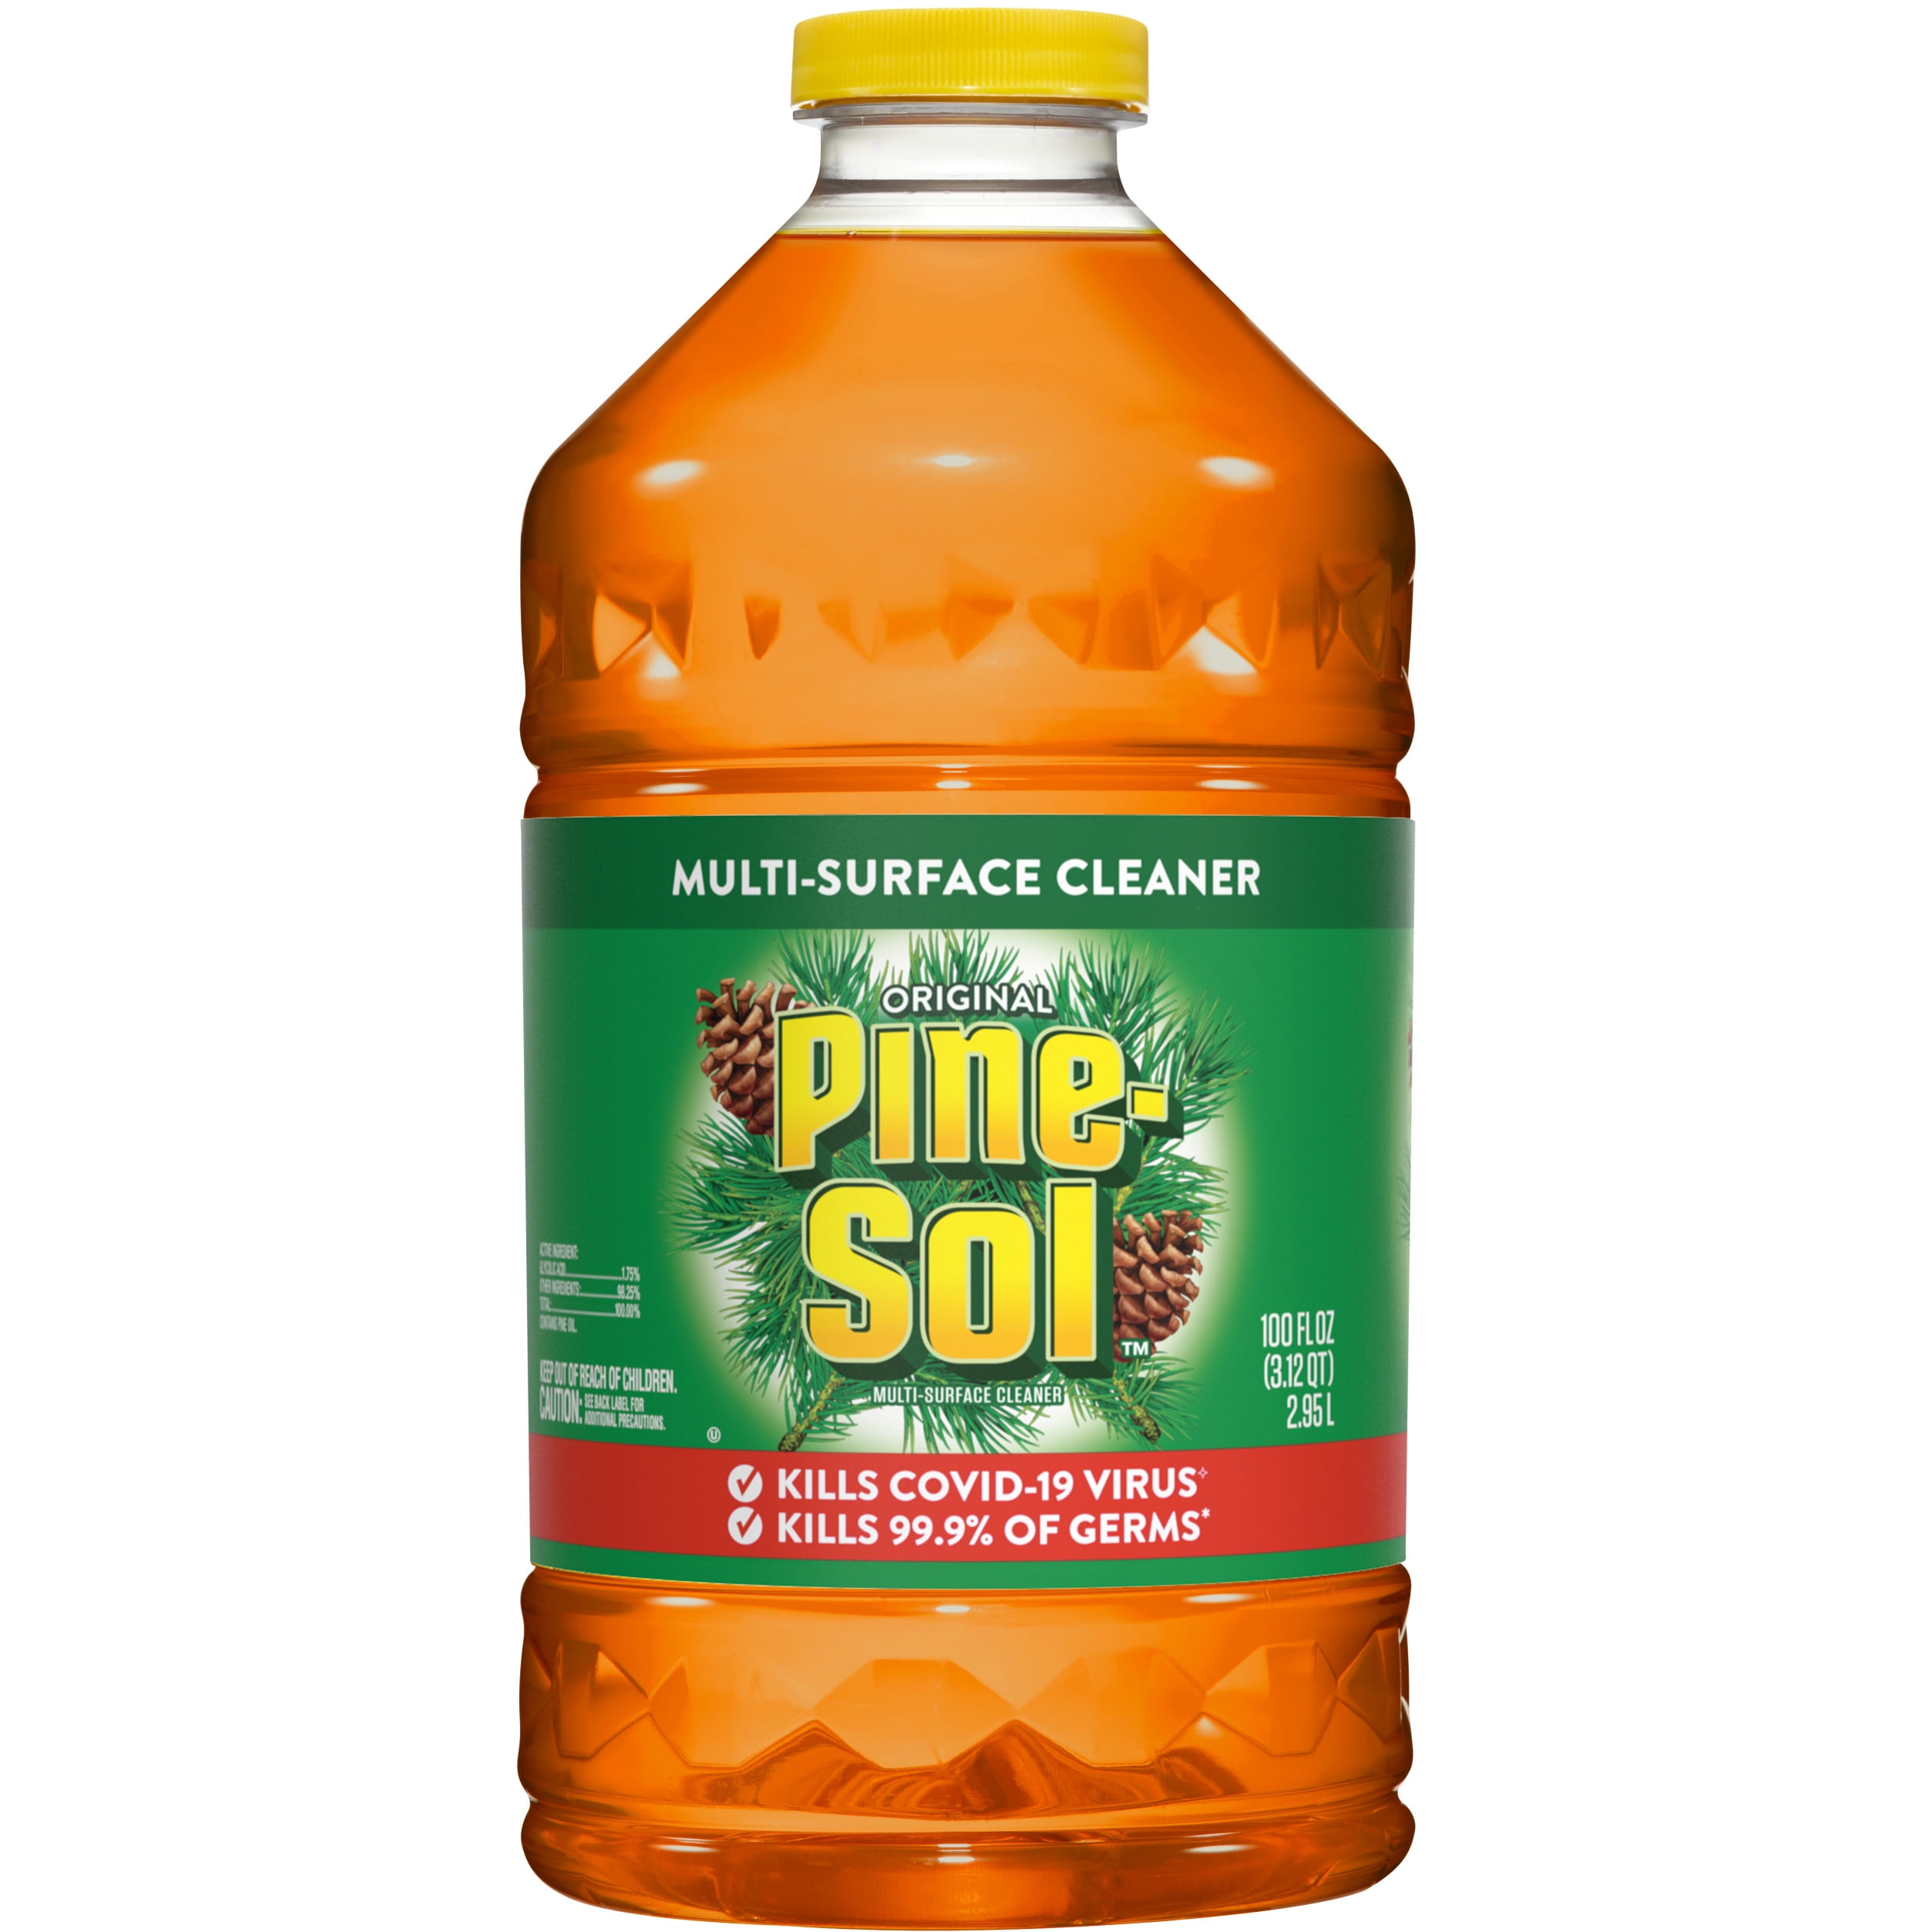 Pine-Sol Multi-Surface Cleaner, Original, 100 fl oz